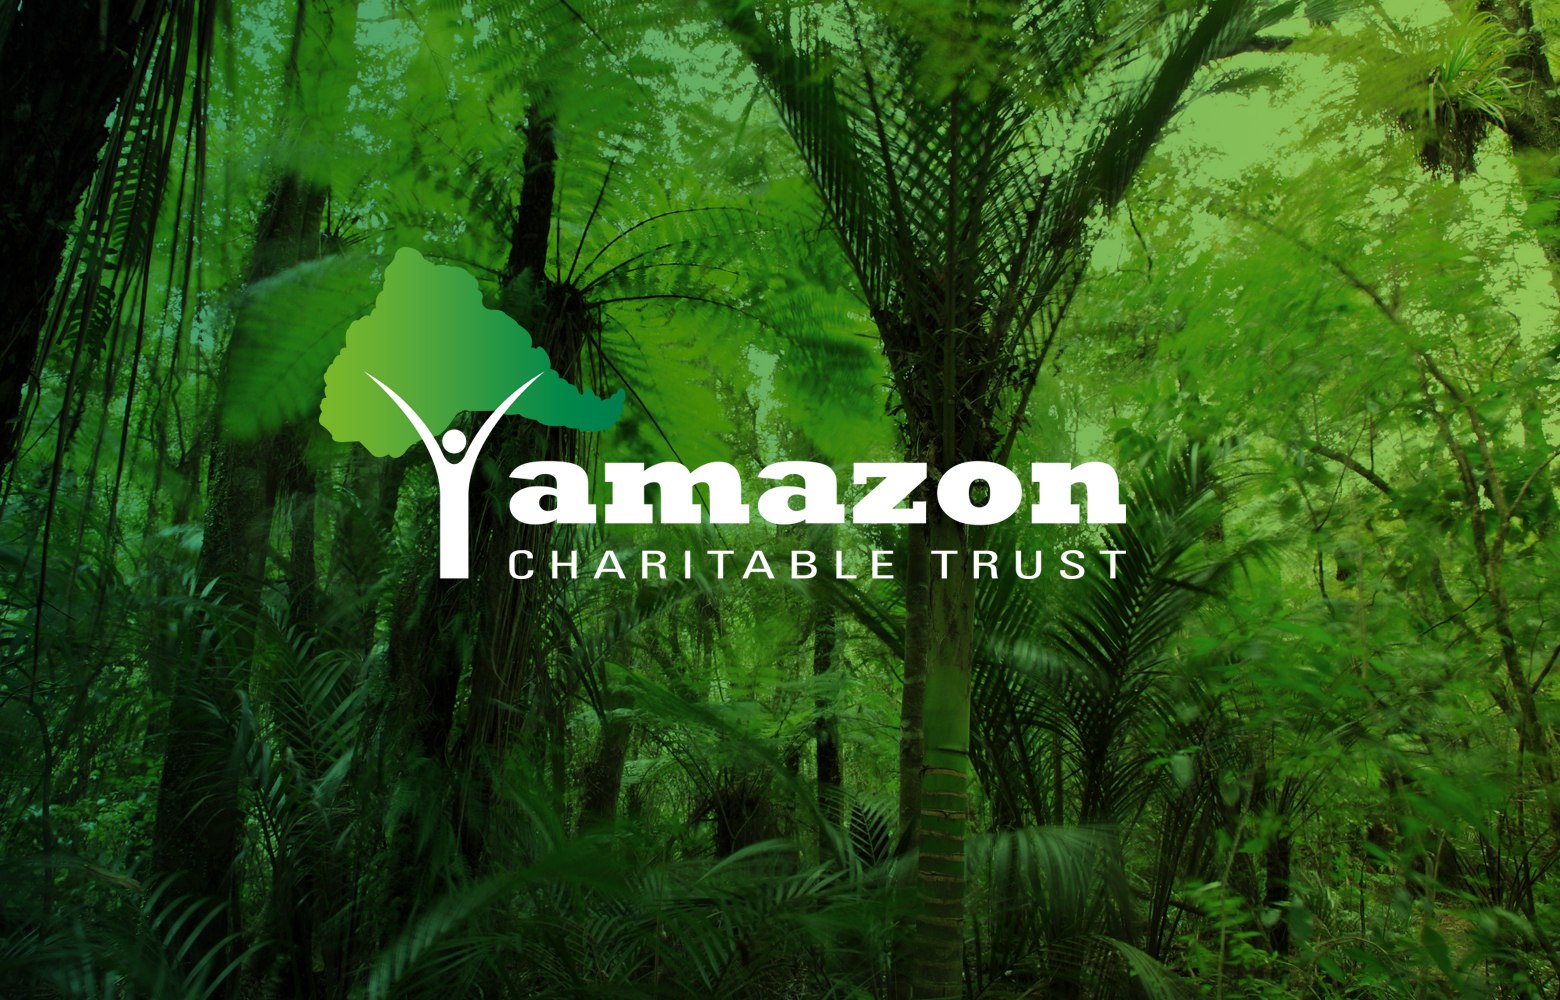 Tree top botany in the Amazon